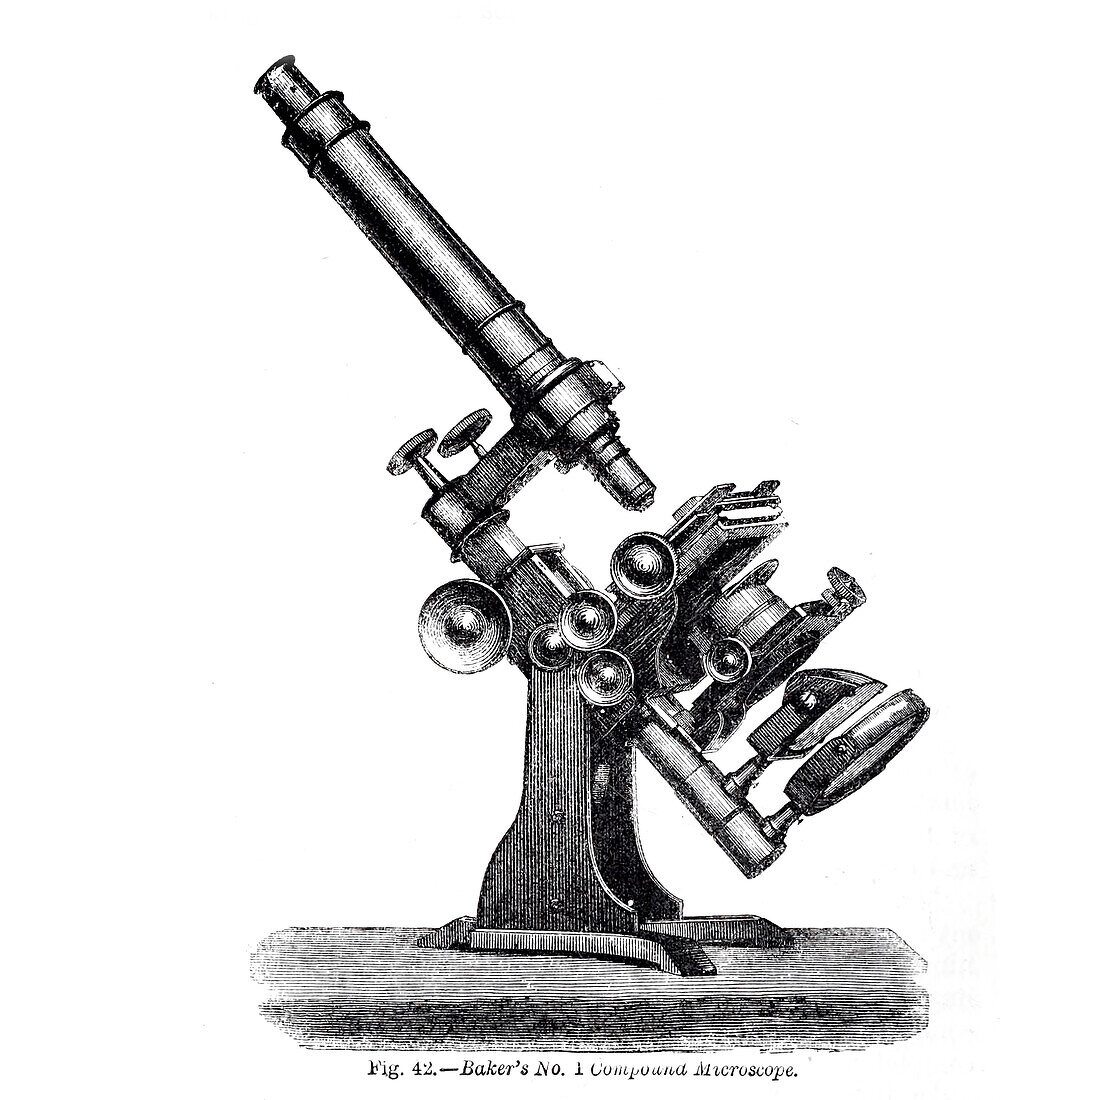 Baker's No. 1 compound microscope, 19th century illustration